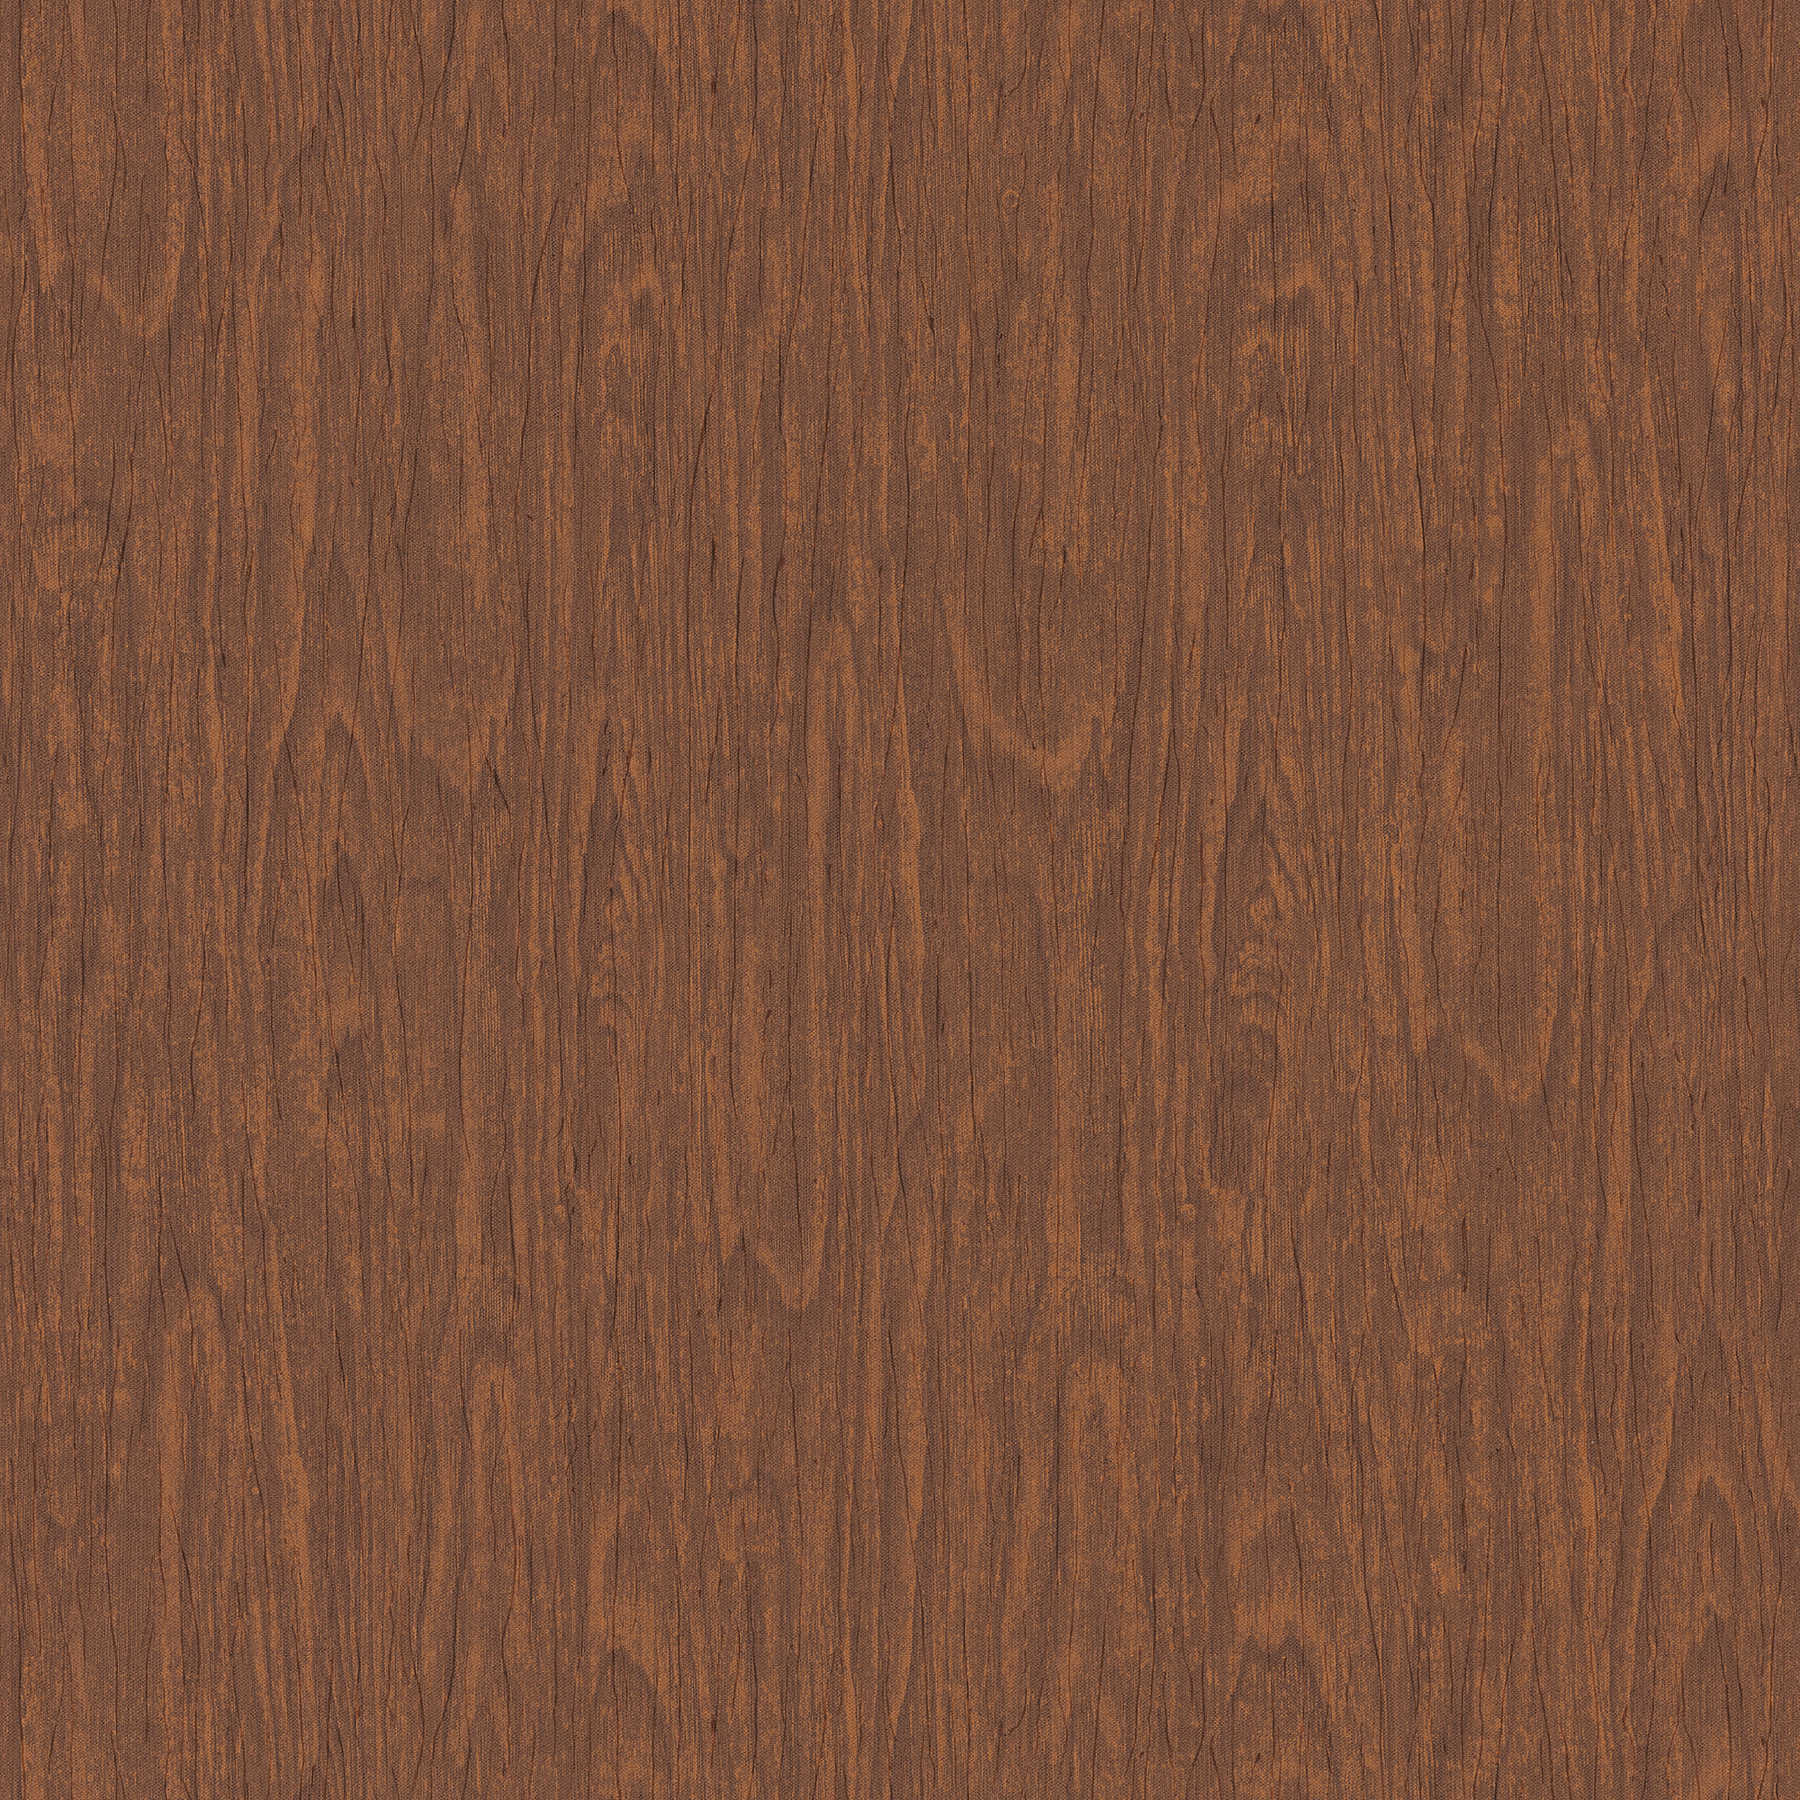 VERSACE Home wallpaper realistic wood look - Brown, Red
